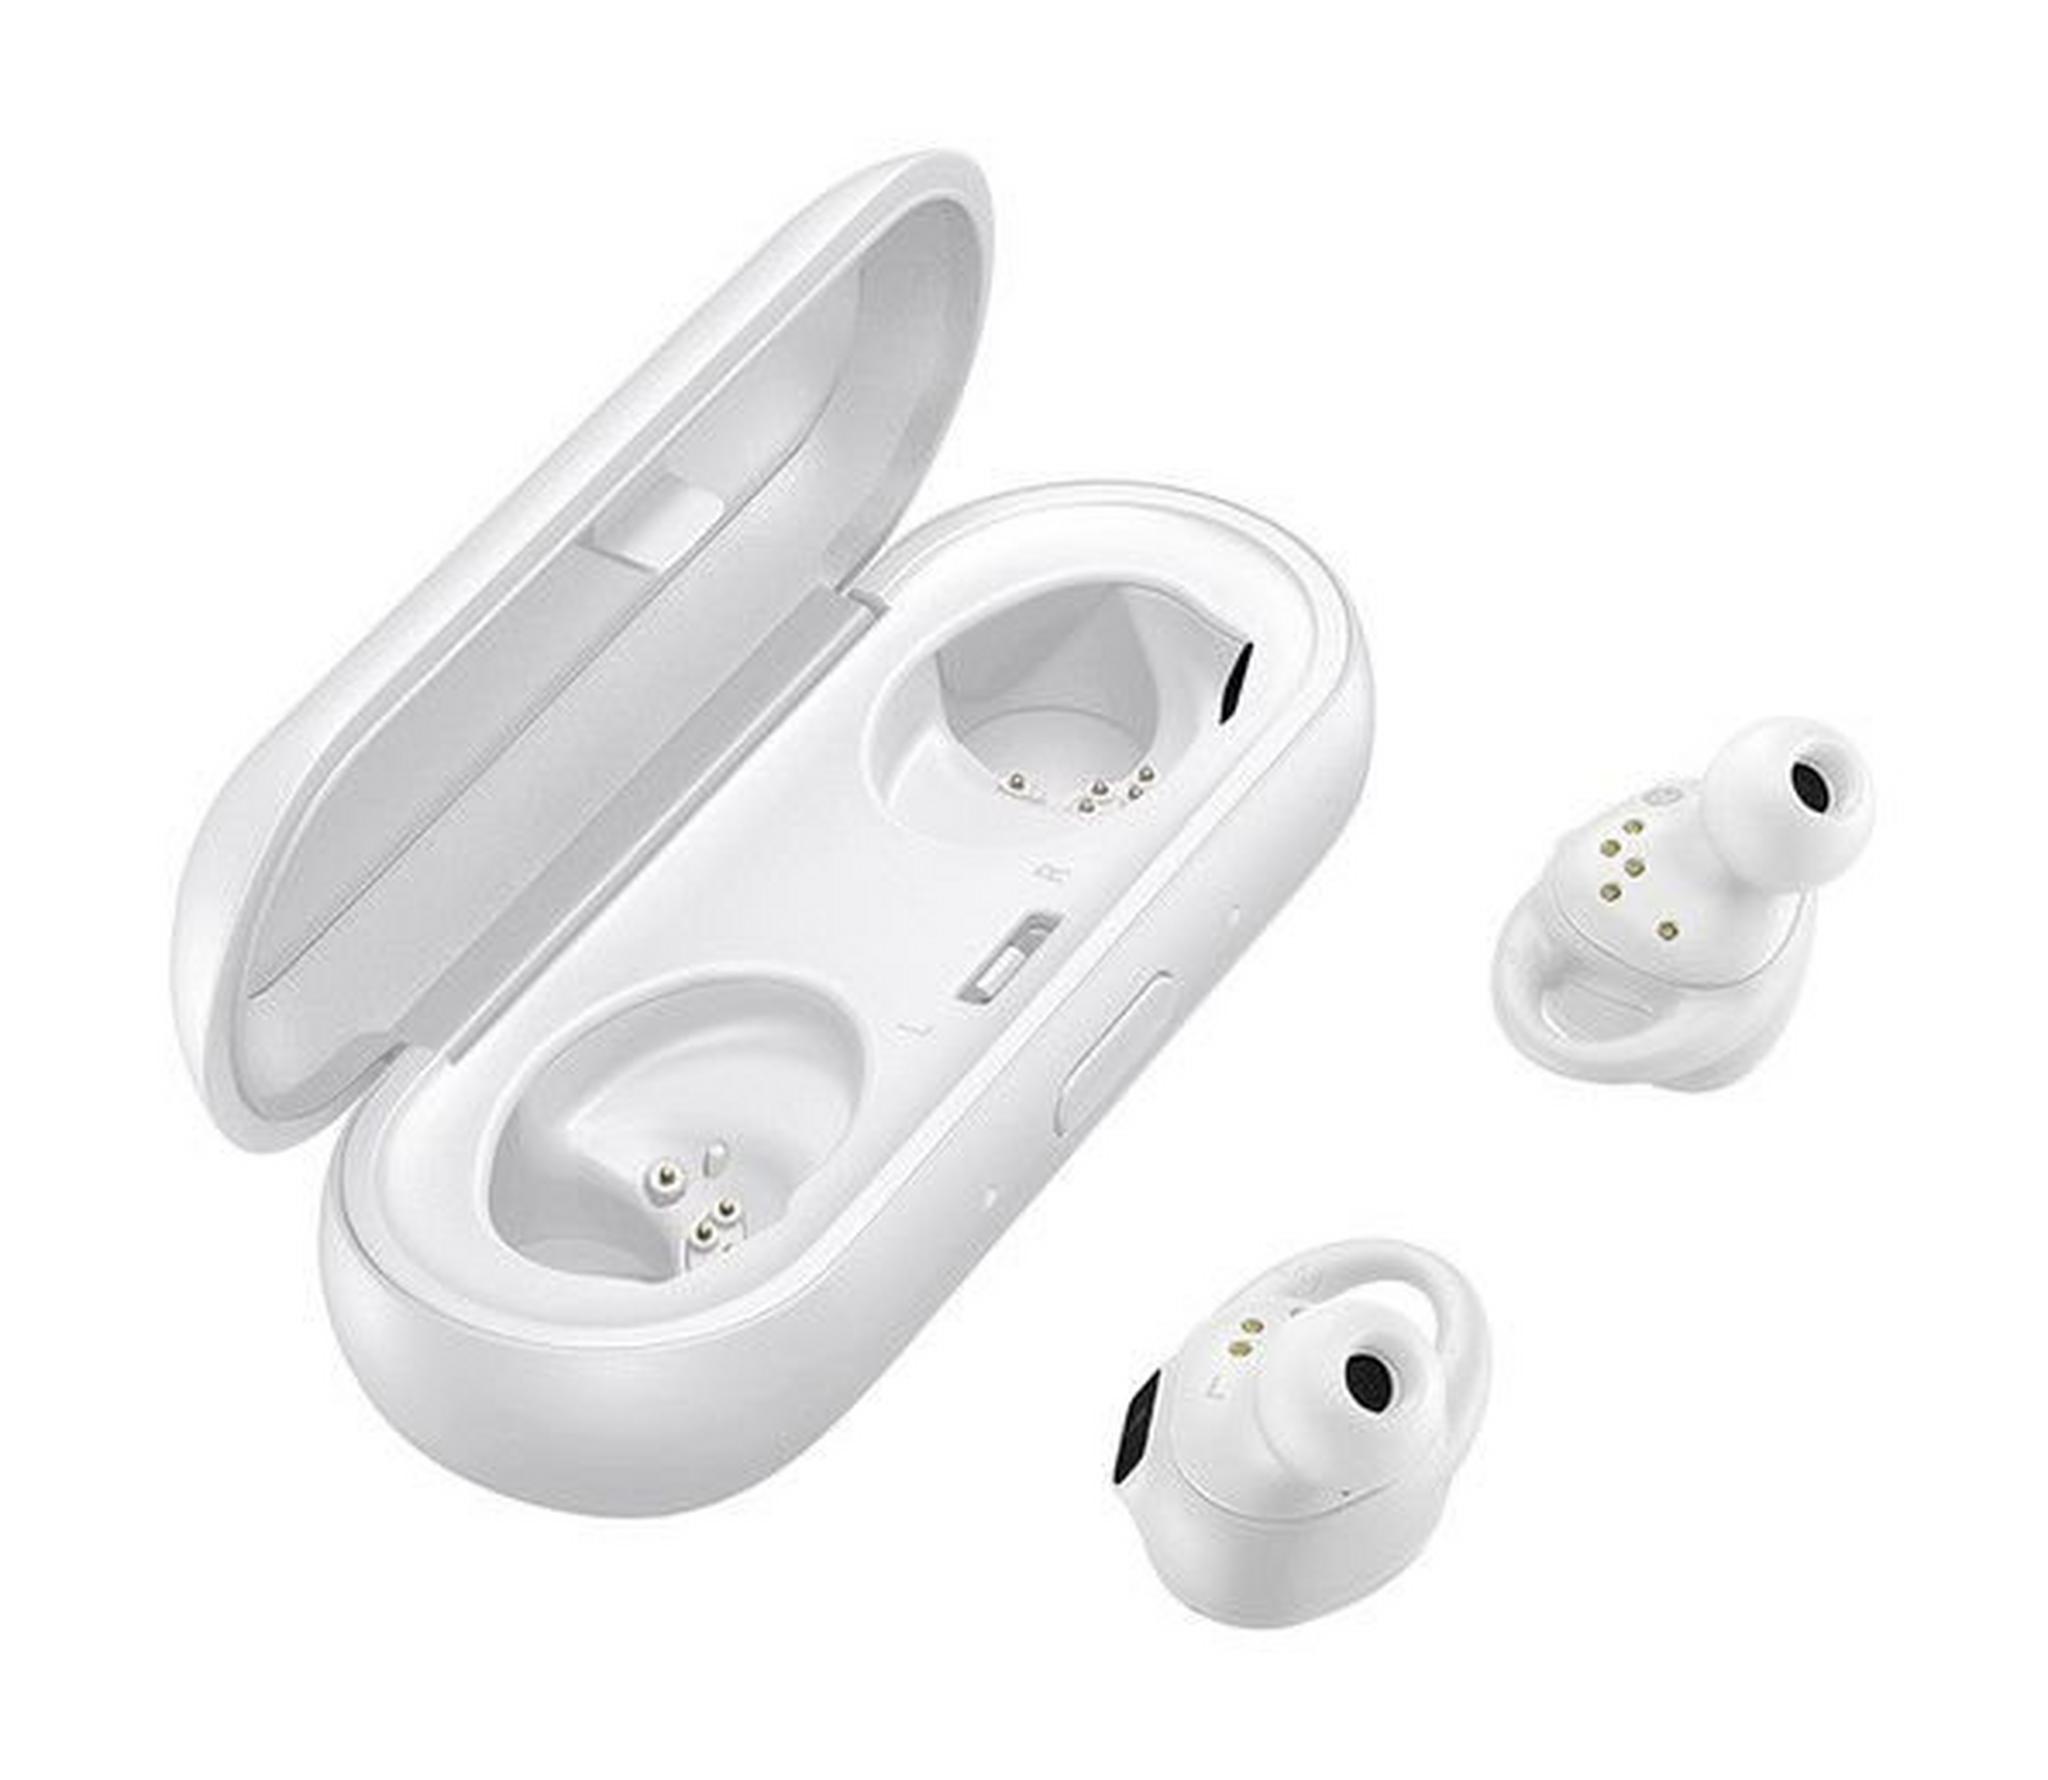 Samsung Gear IconX Wireless Earbuds – White